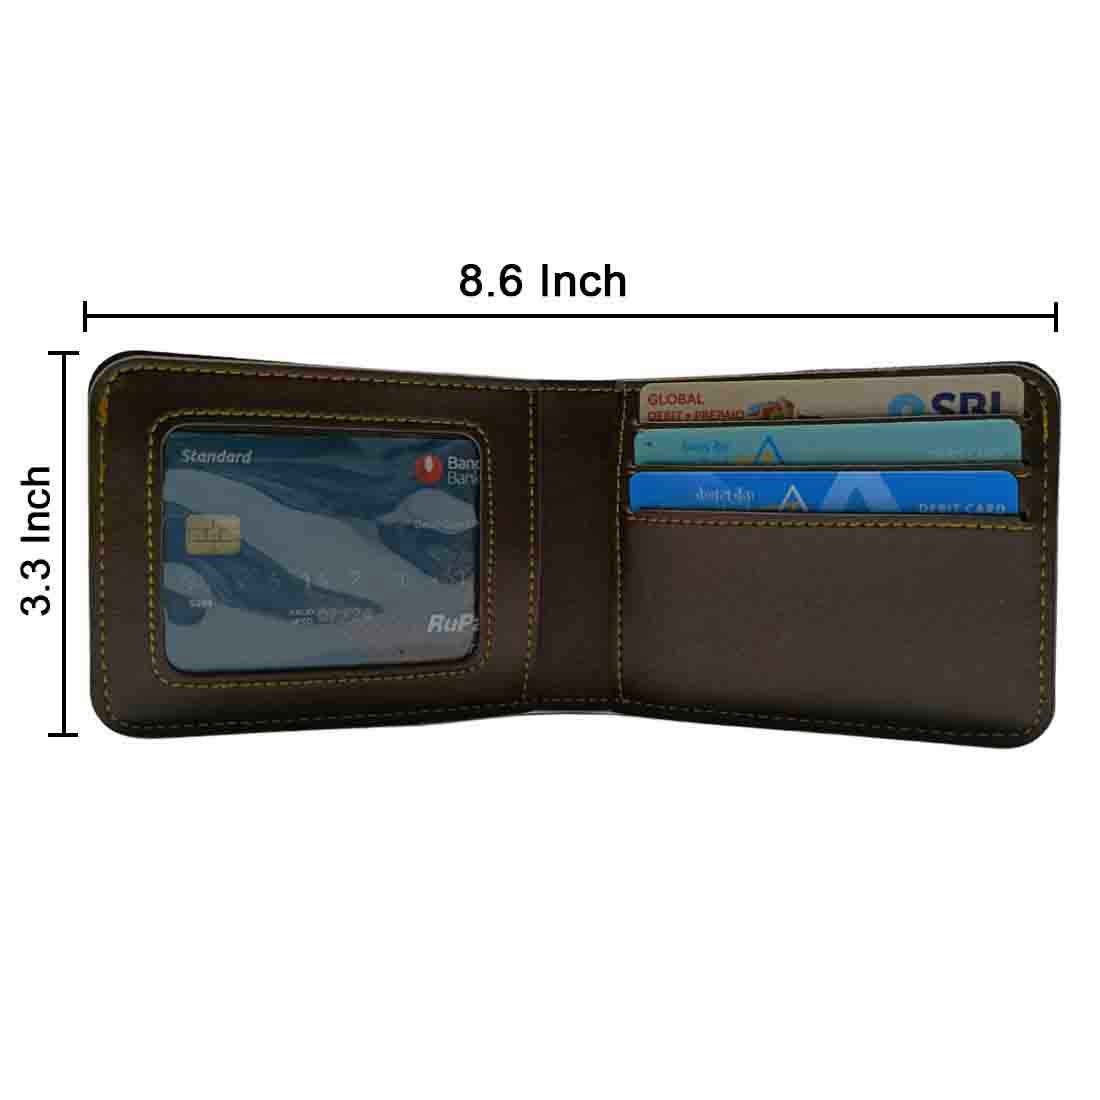 Genuine Men's Leather Short Zipper Wallet | Buy Men's Wallets Online